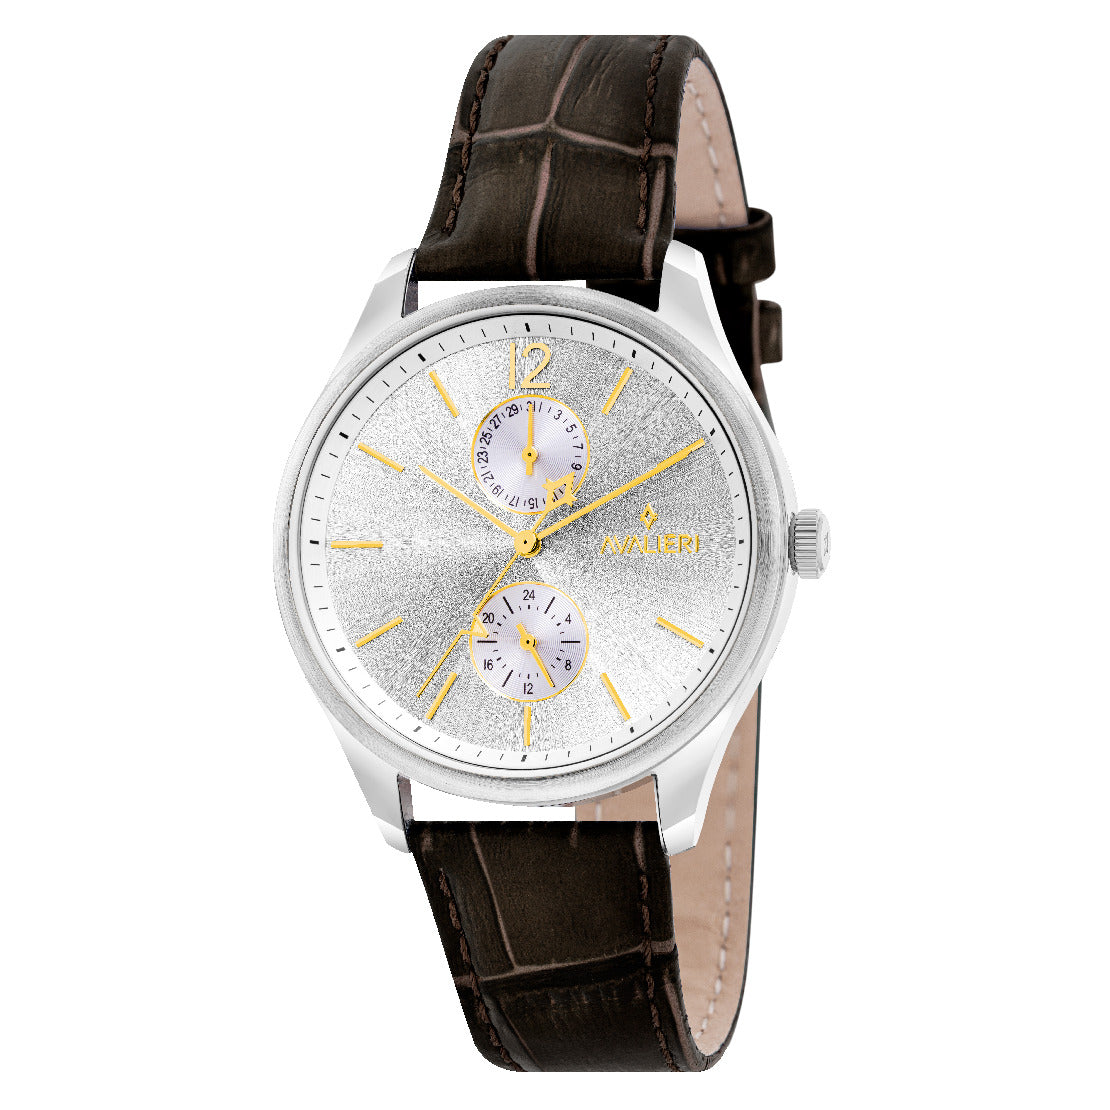 Avalieri Men's Quartz Watch With Silver White Dial - AV-2471B